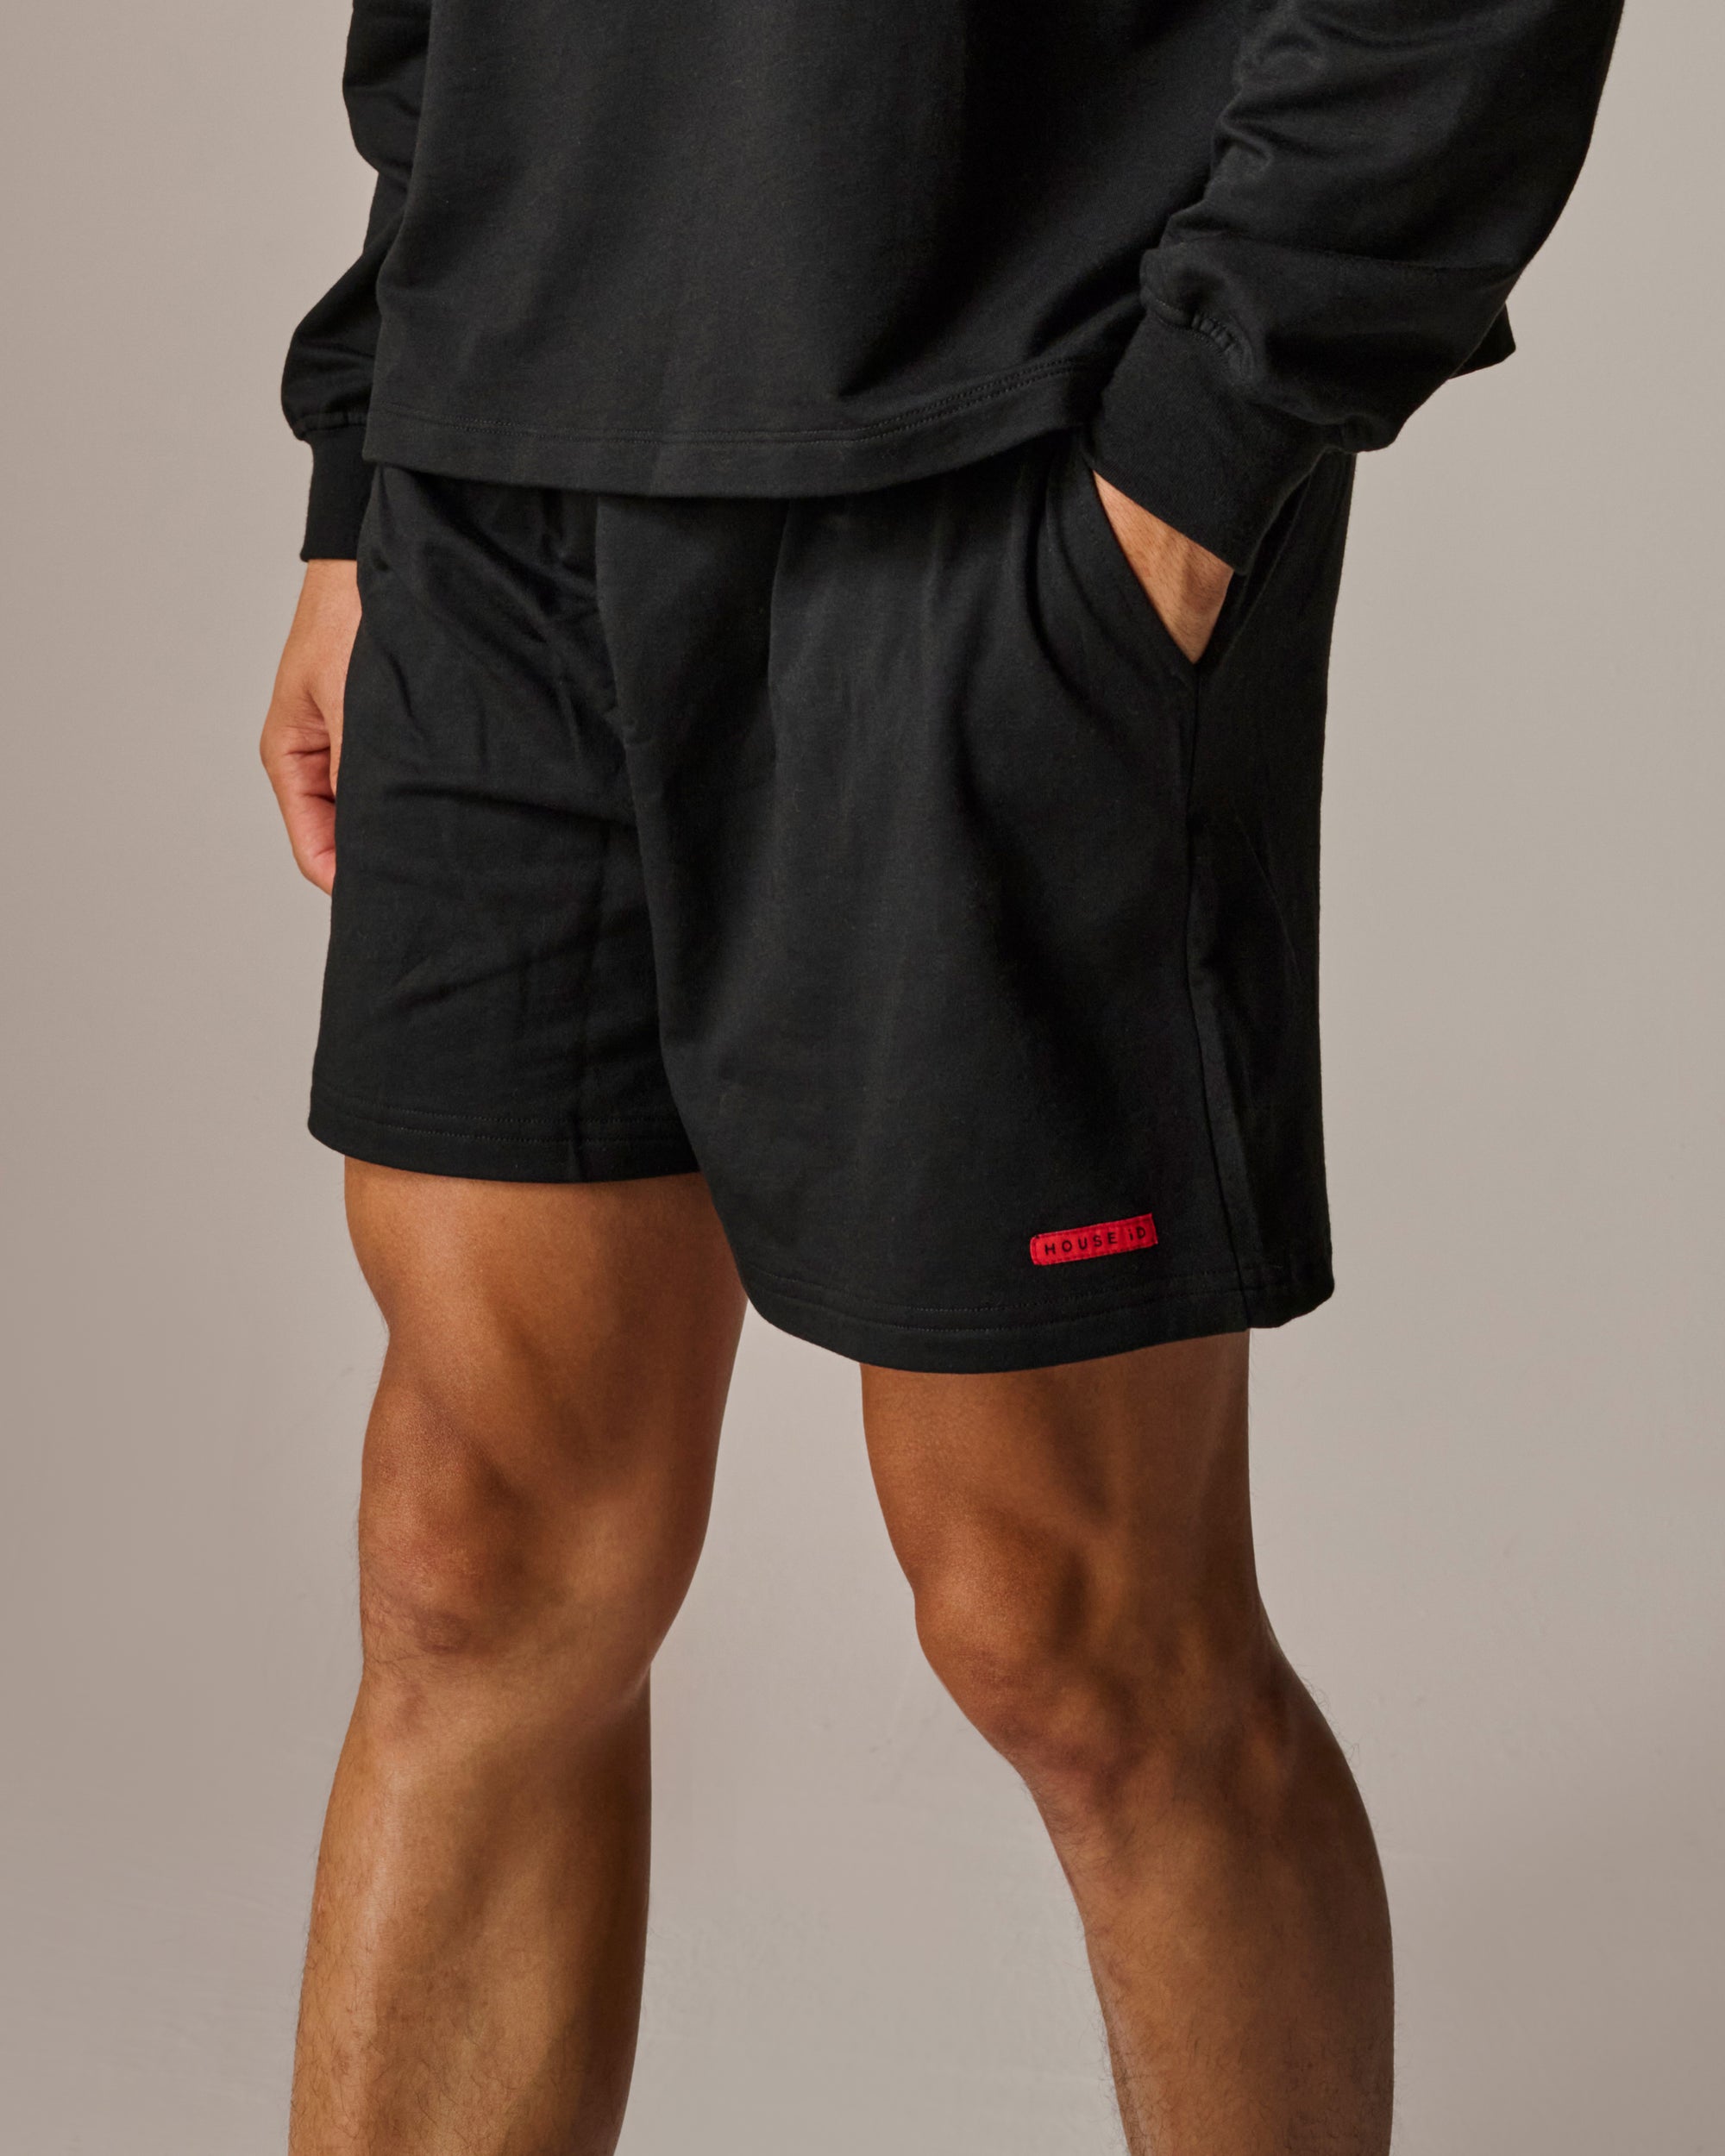 Jersey short in black